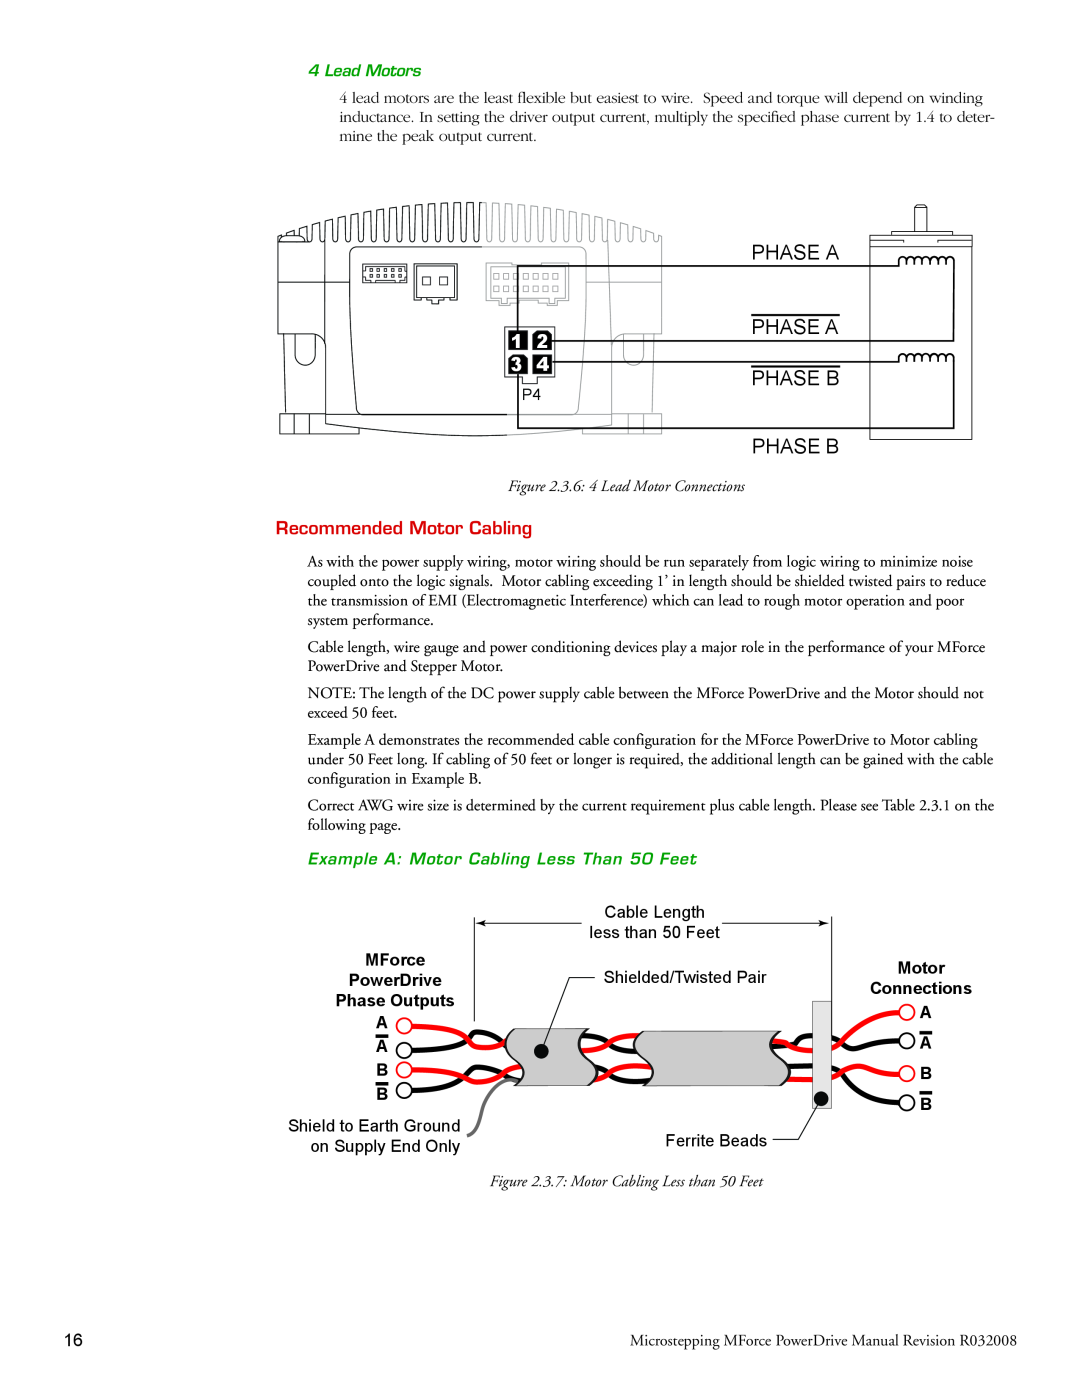 Intelligent Motion Systems Motion Detector Phase A Phase A Phase B Phase B, Recommended Motor Cabling, Lead Motors 